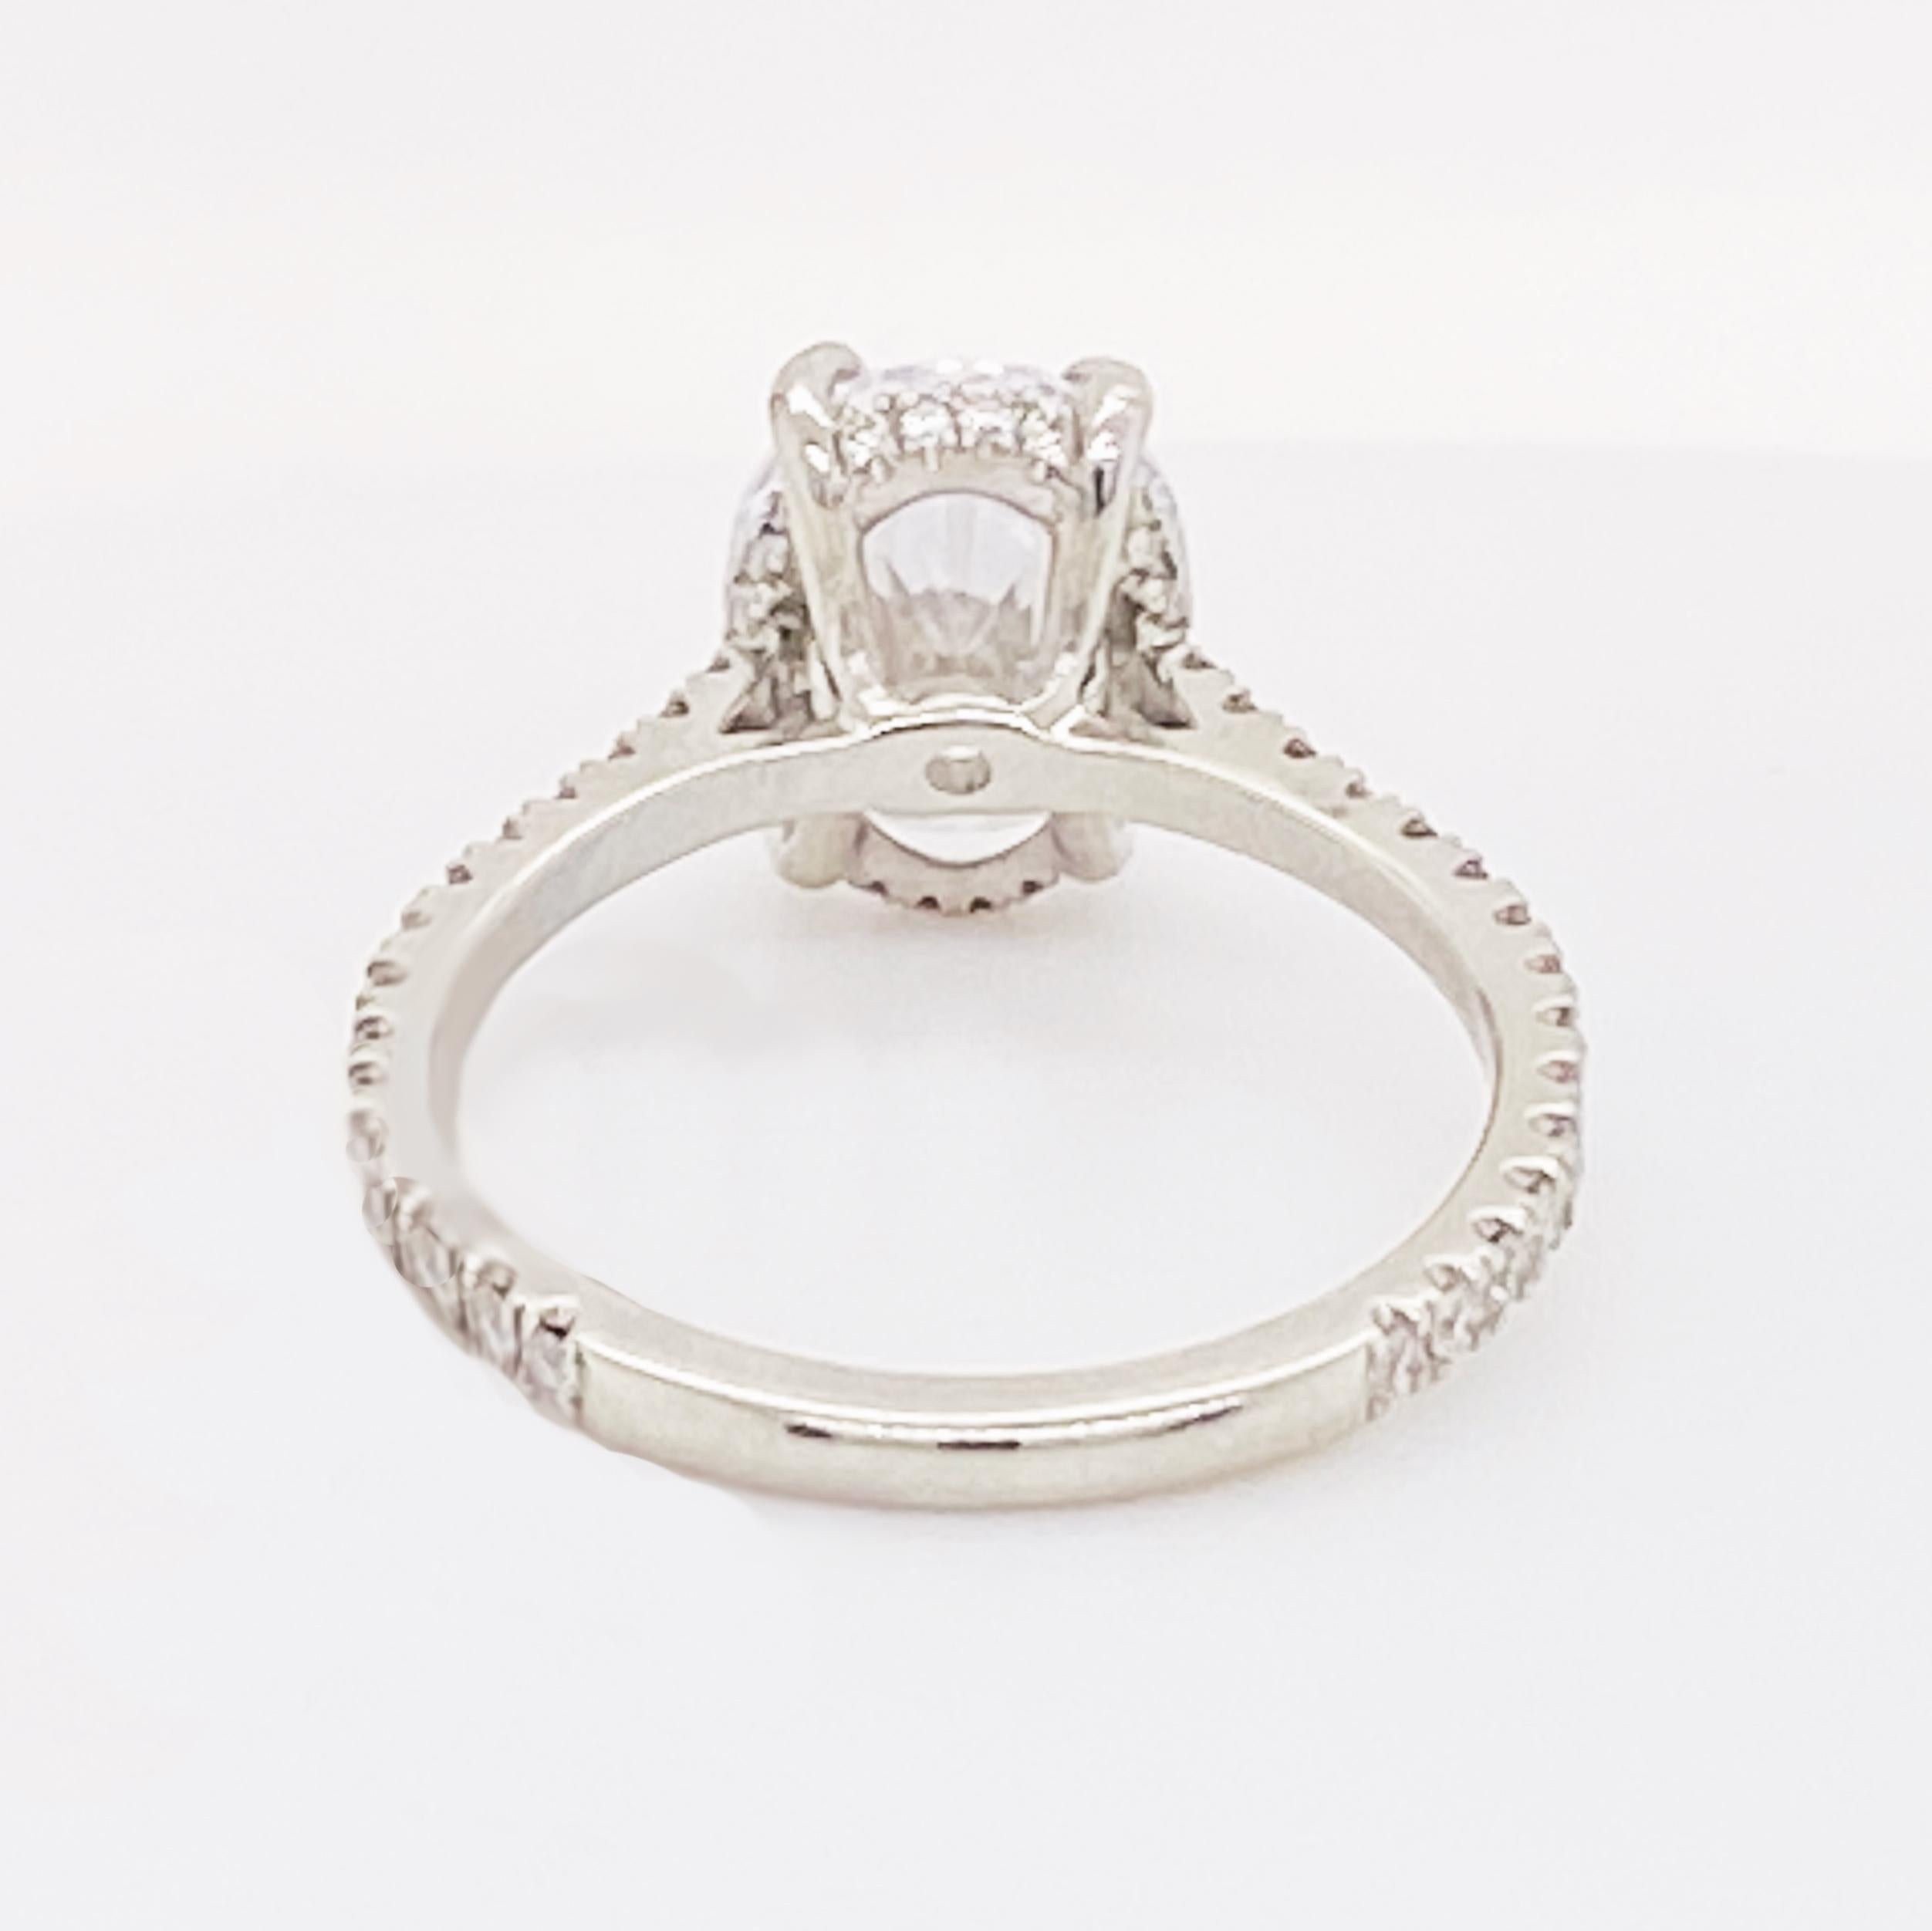 3.5 carat oval diamond ring price